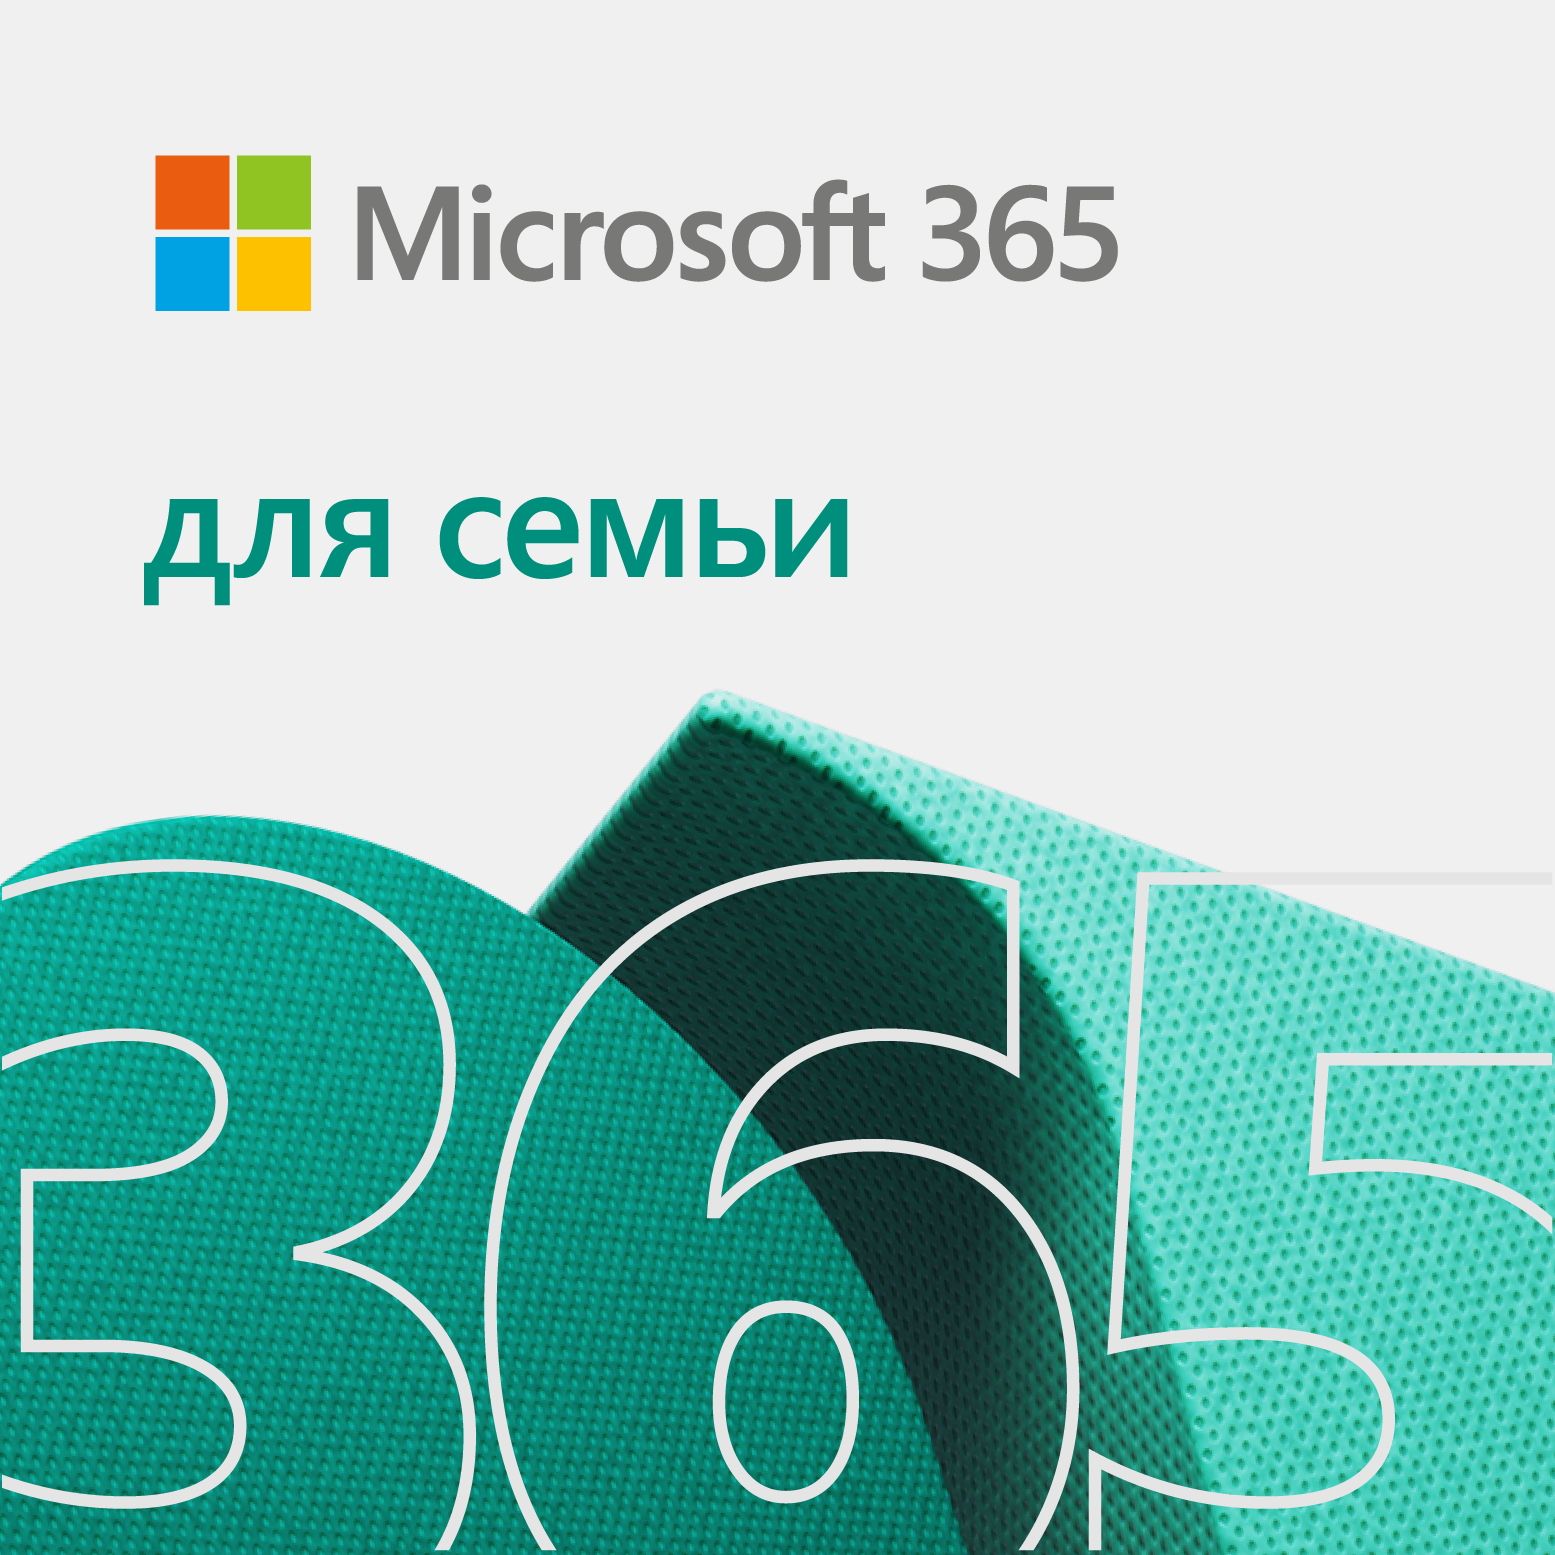 Подписка Microsoft 365 для семьи (12 месяцев)